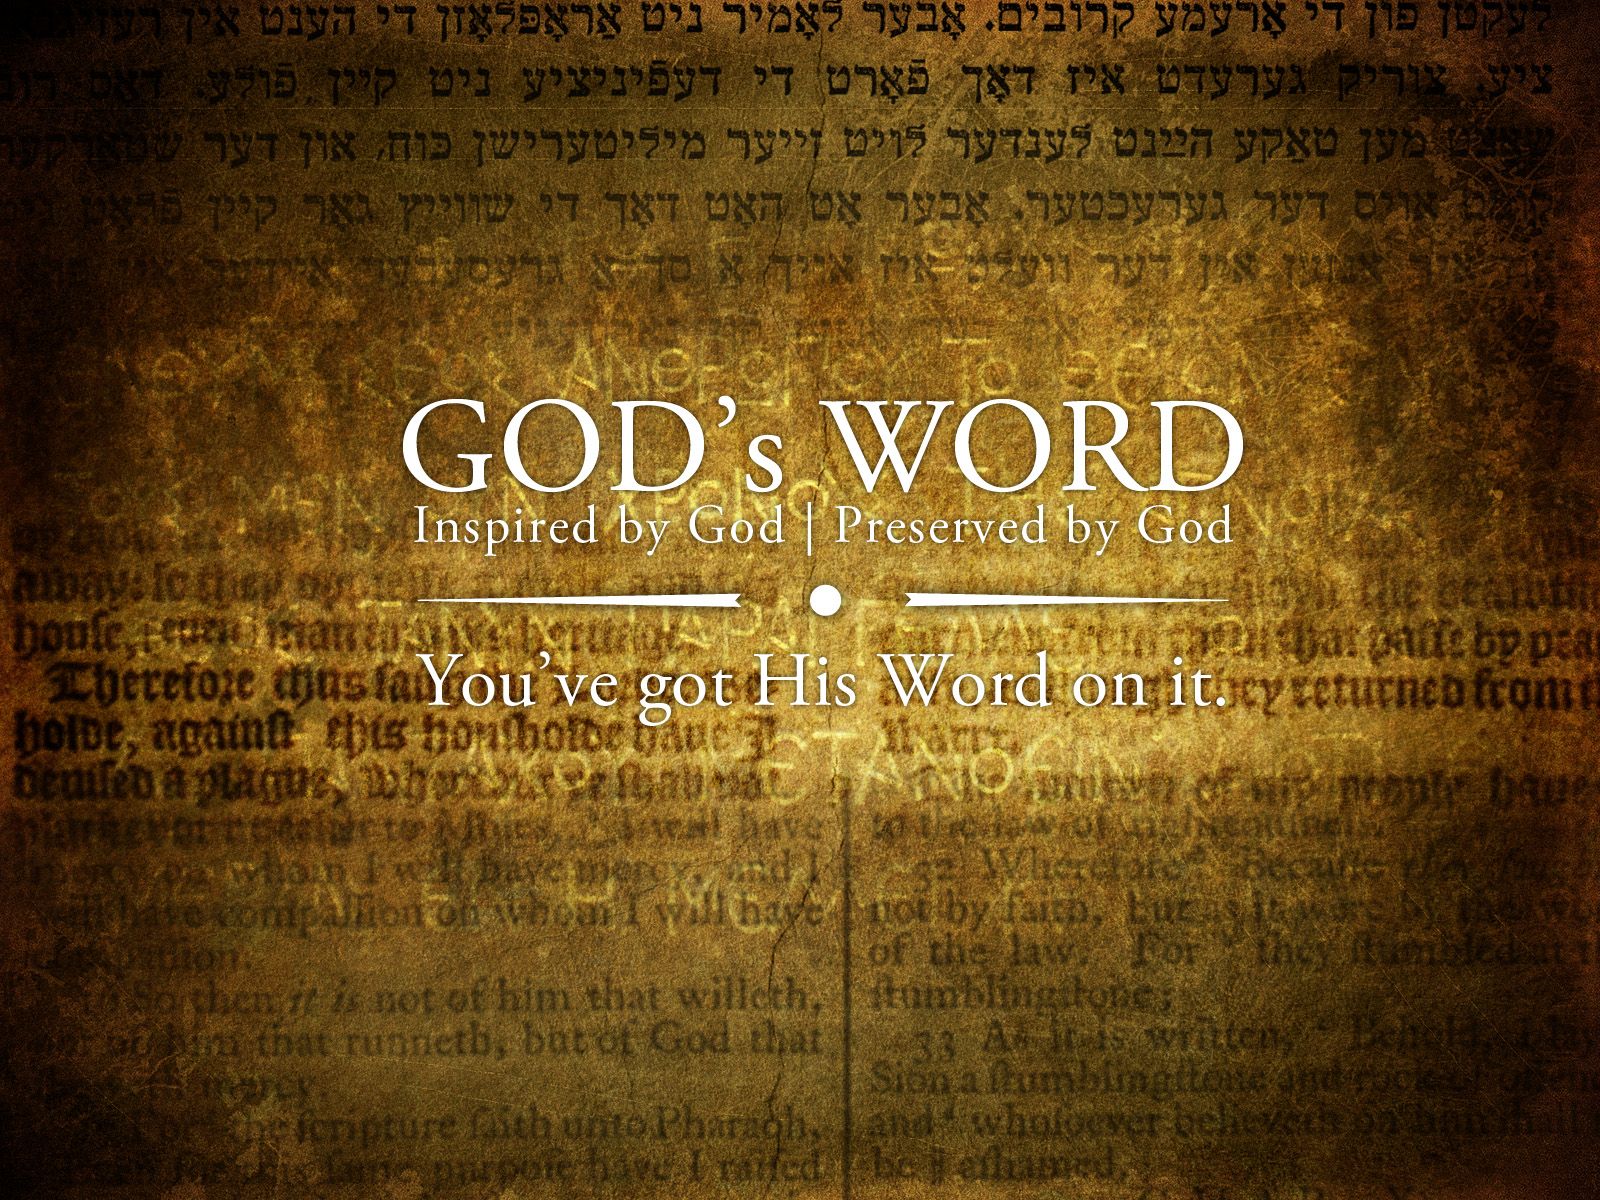 BIBLE-VERSES religion quote text poster bible verses js wallpaper ...